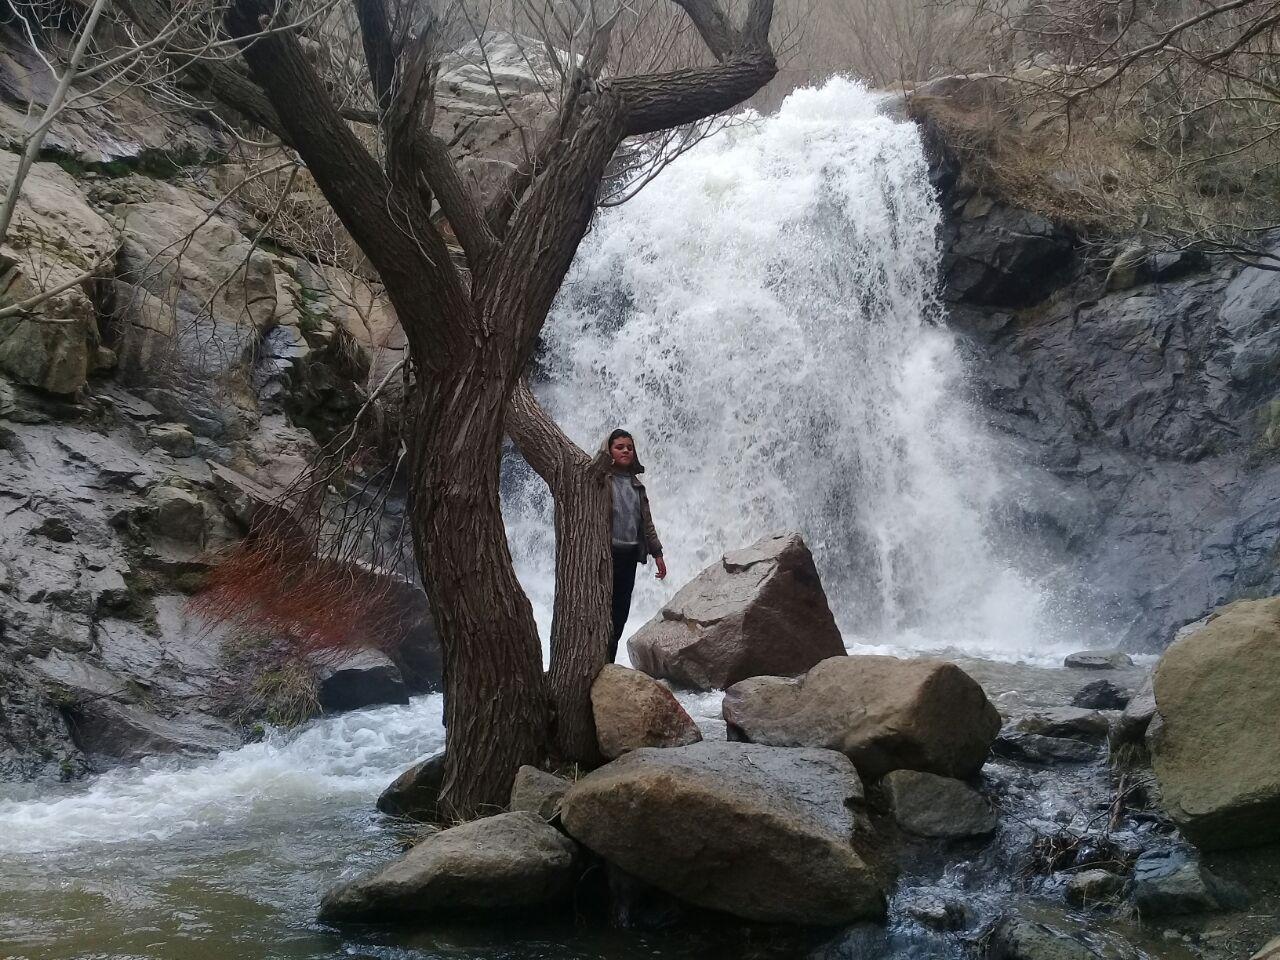 تویسرکان, آبشار اللو, Tuyserkan, Alallu Waterfall